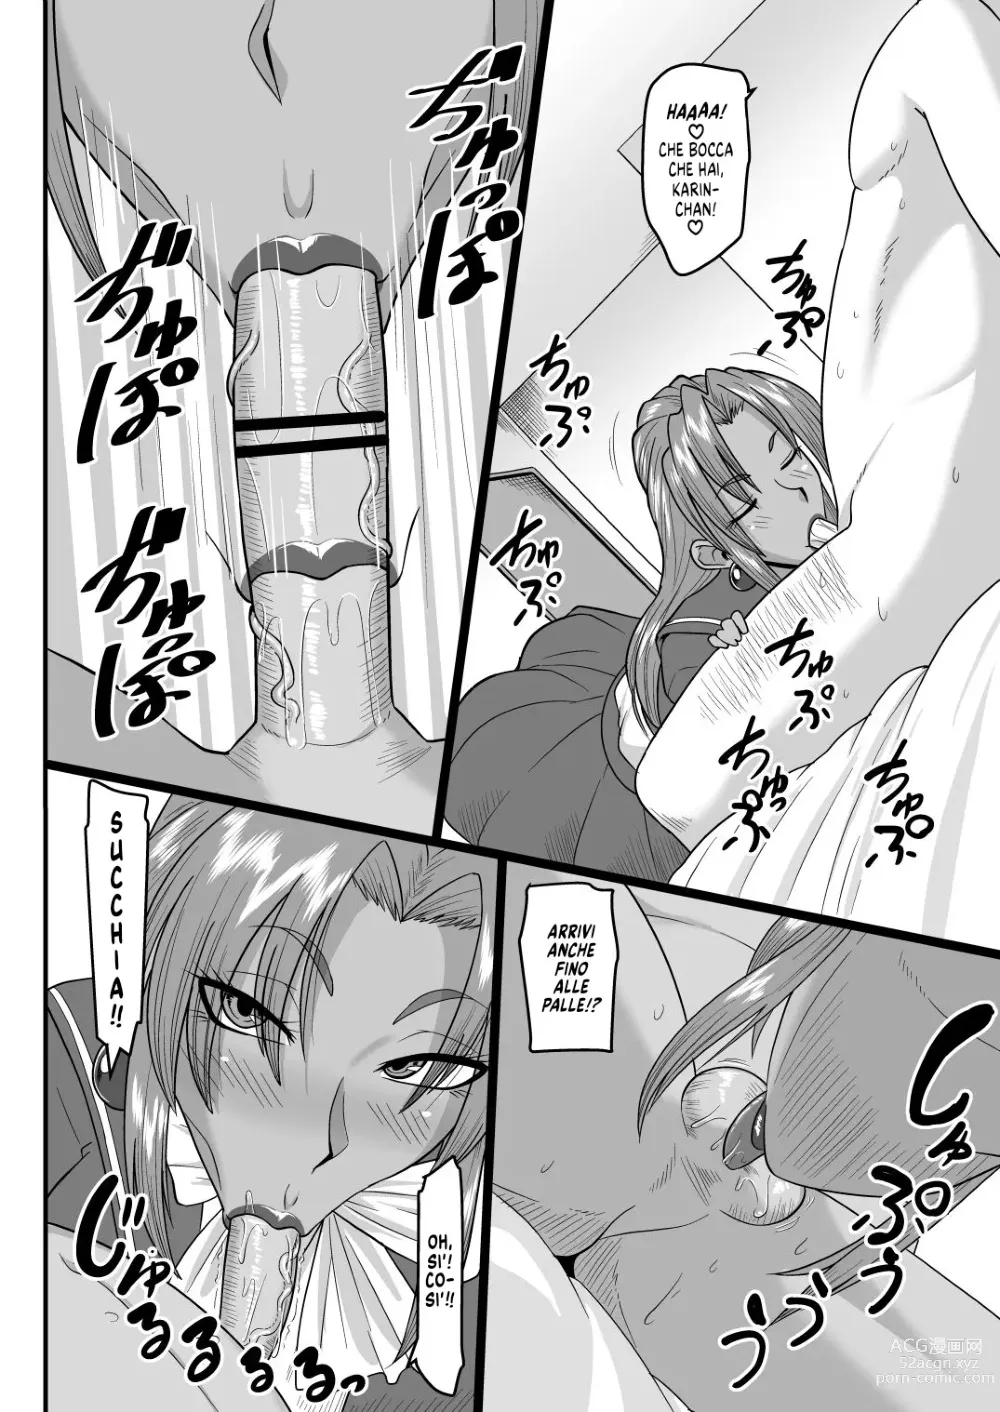 Page 7 of doujinshi Via a Sbatterci Karin!